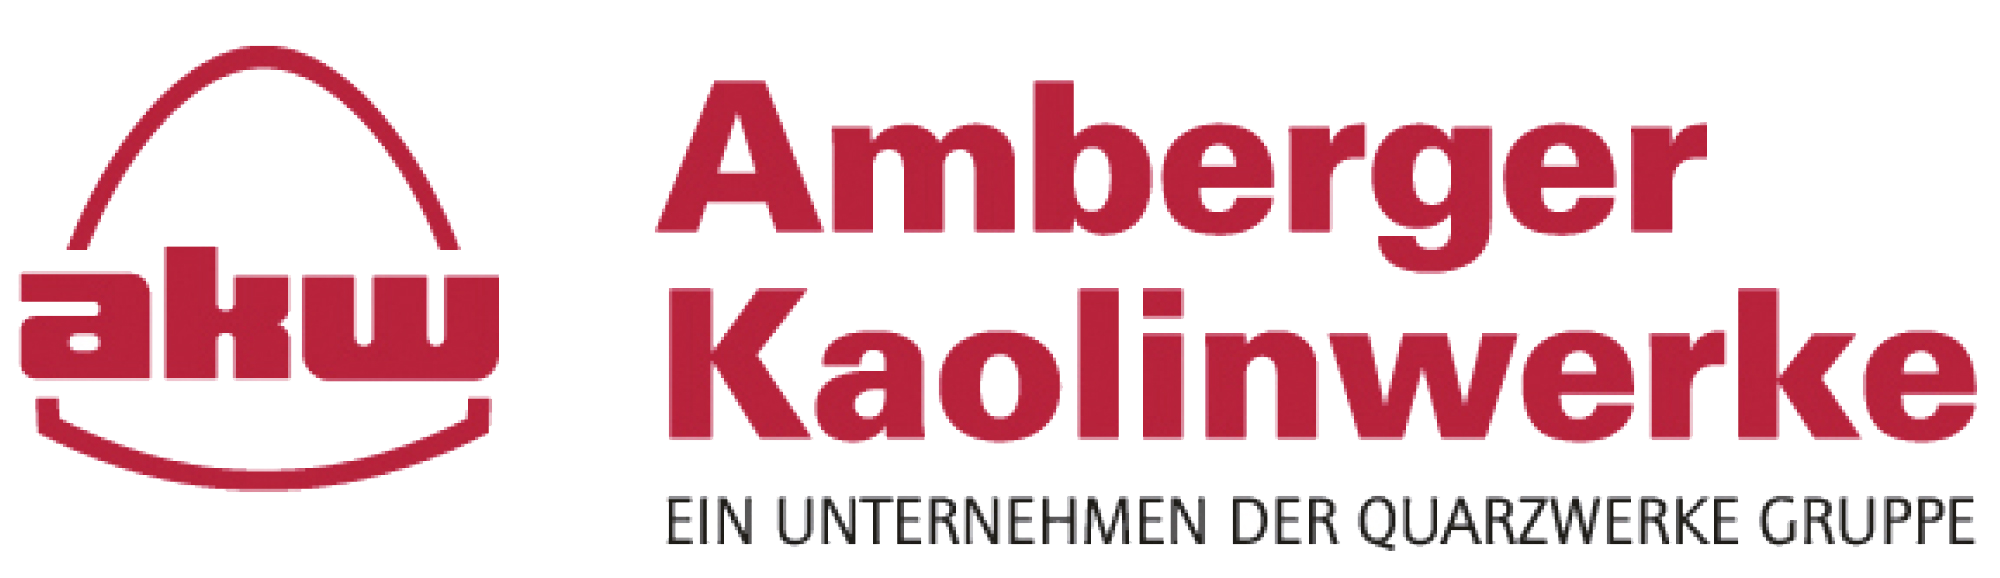 Amberger Kaolinwerke